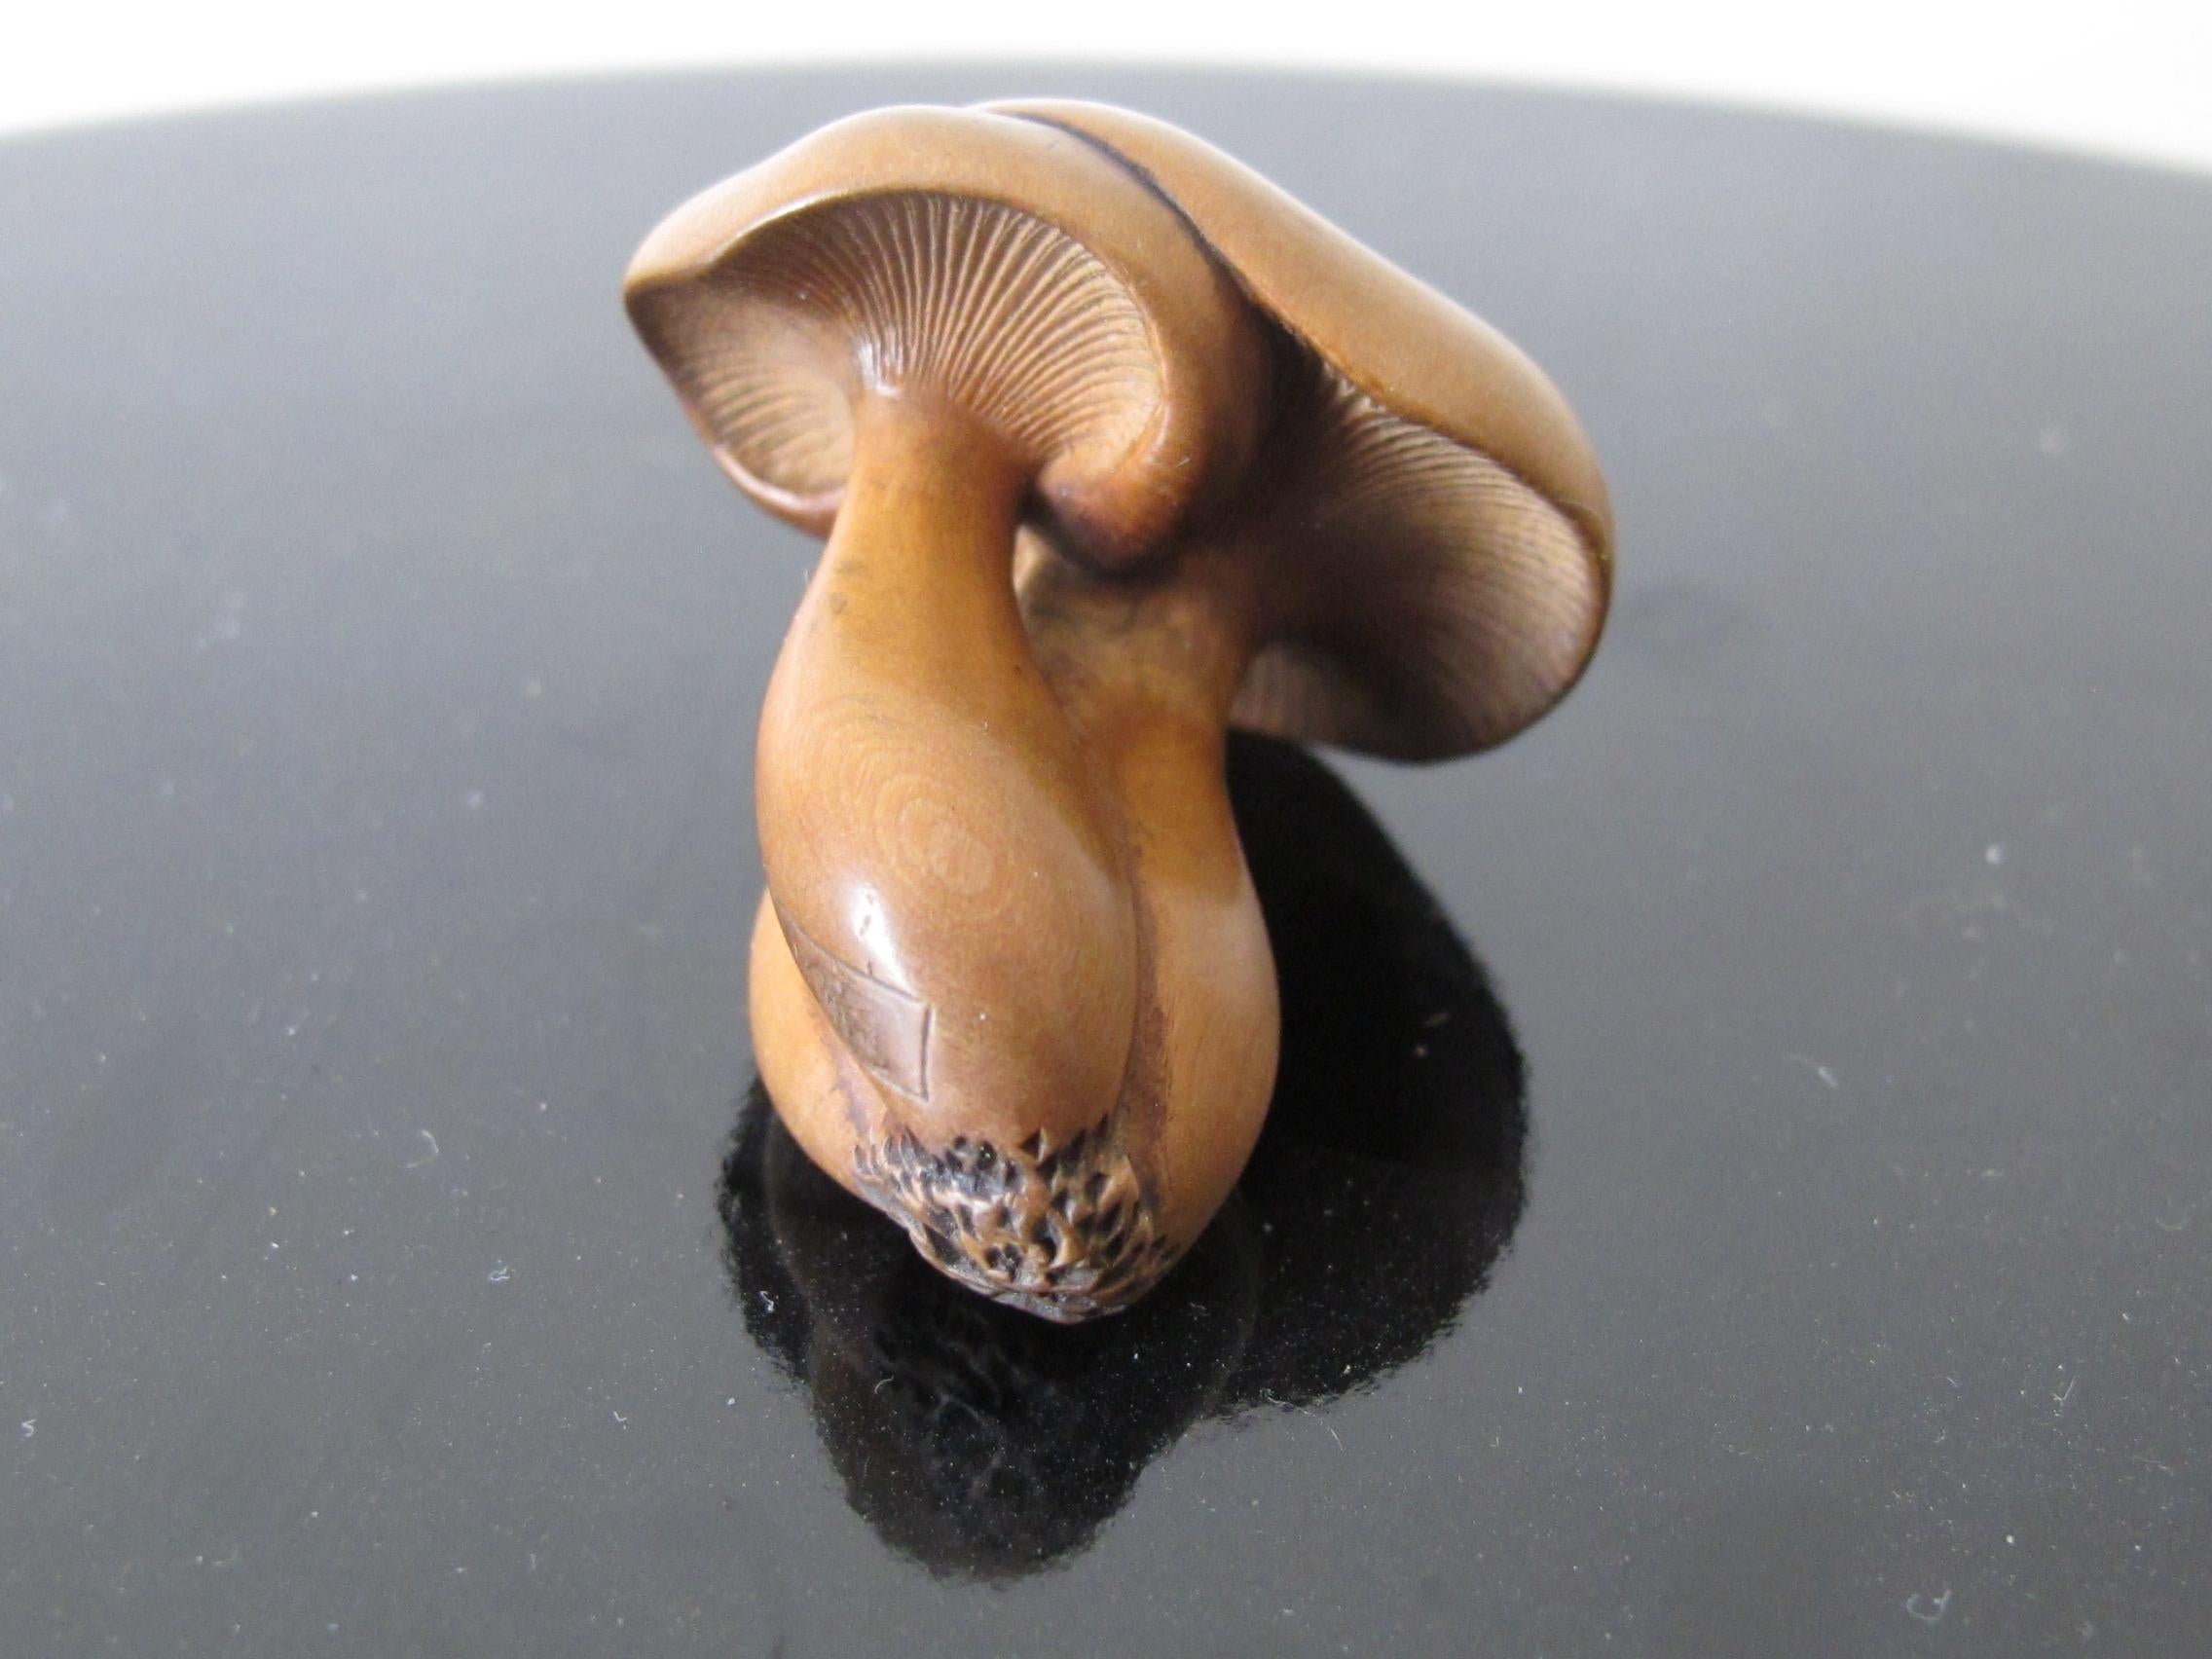 19th century Tadakuni netsuke in form of mushrooms.